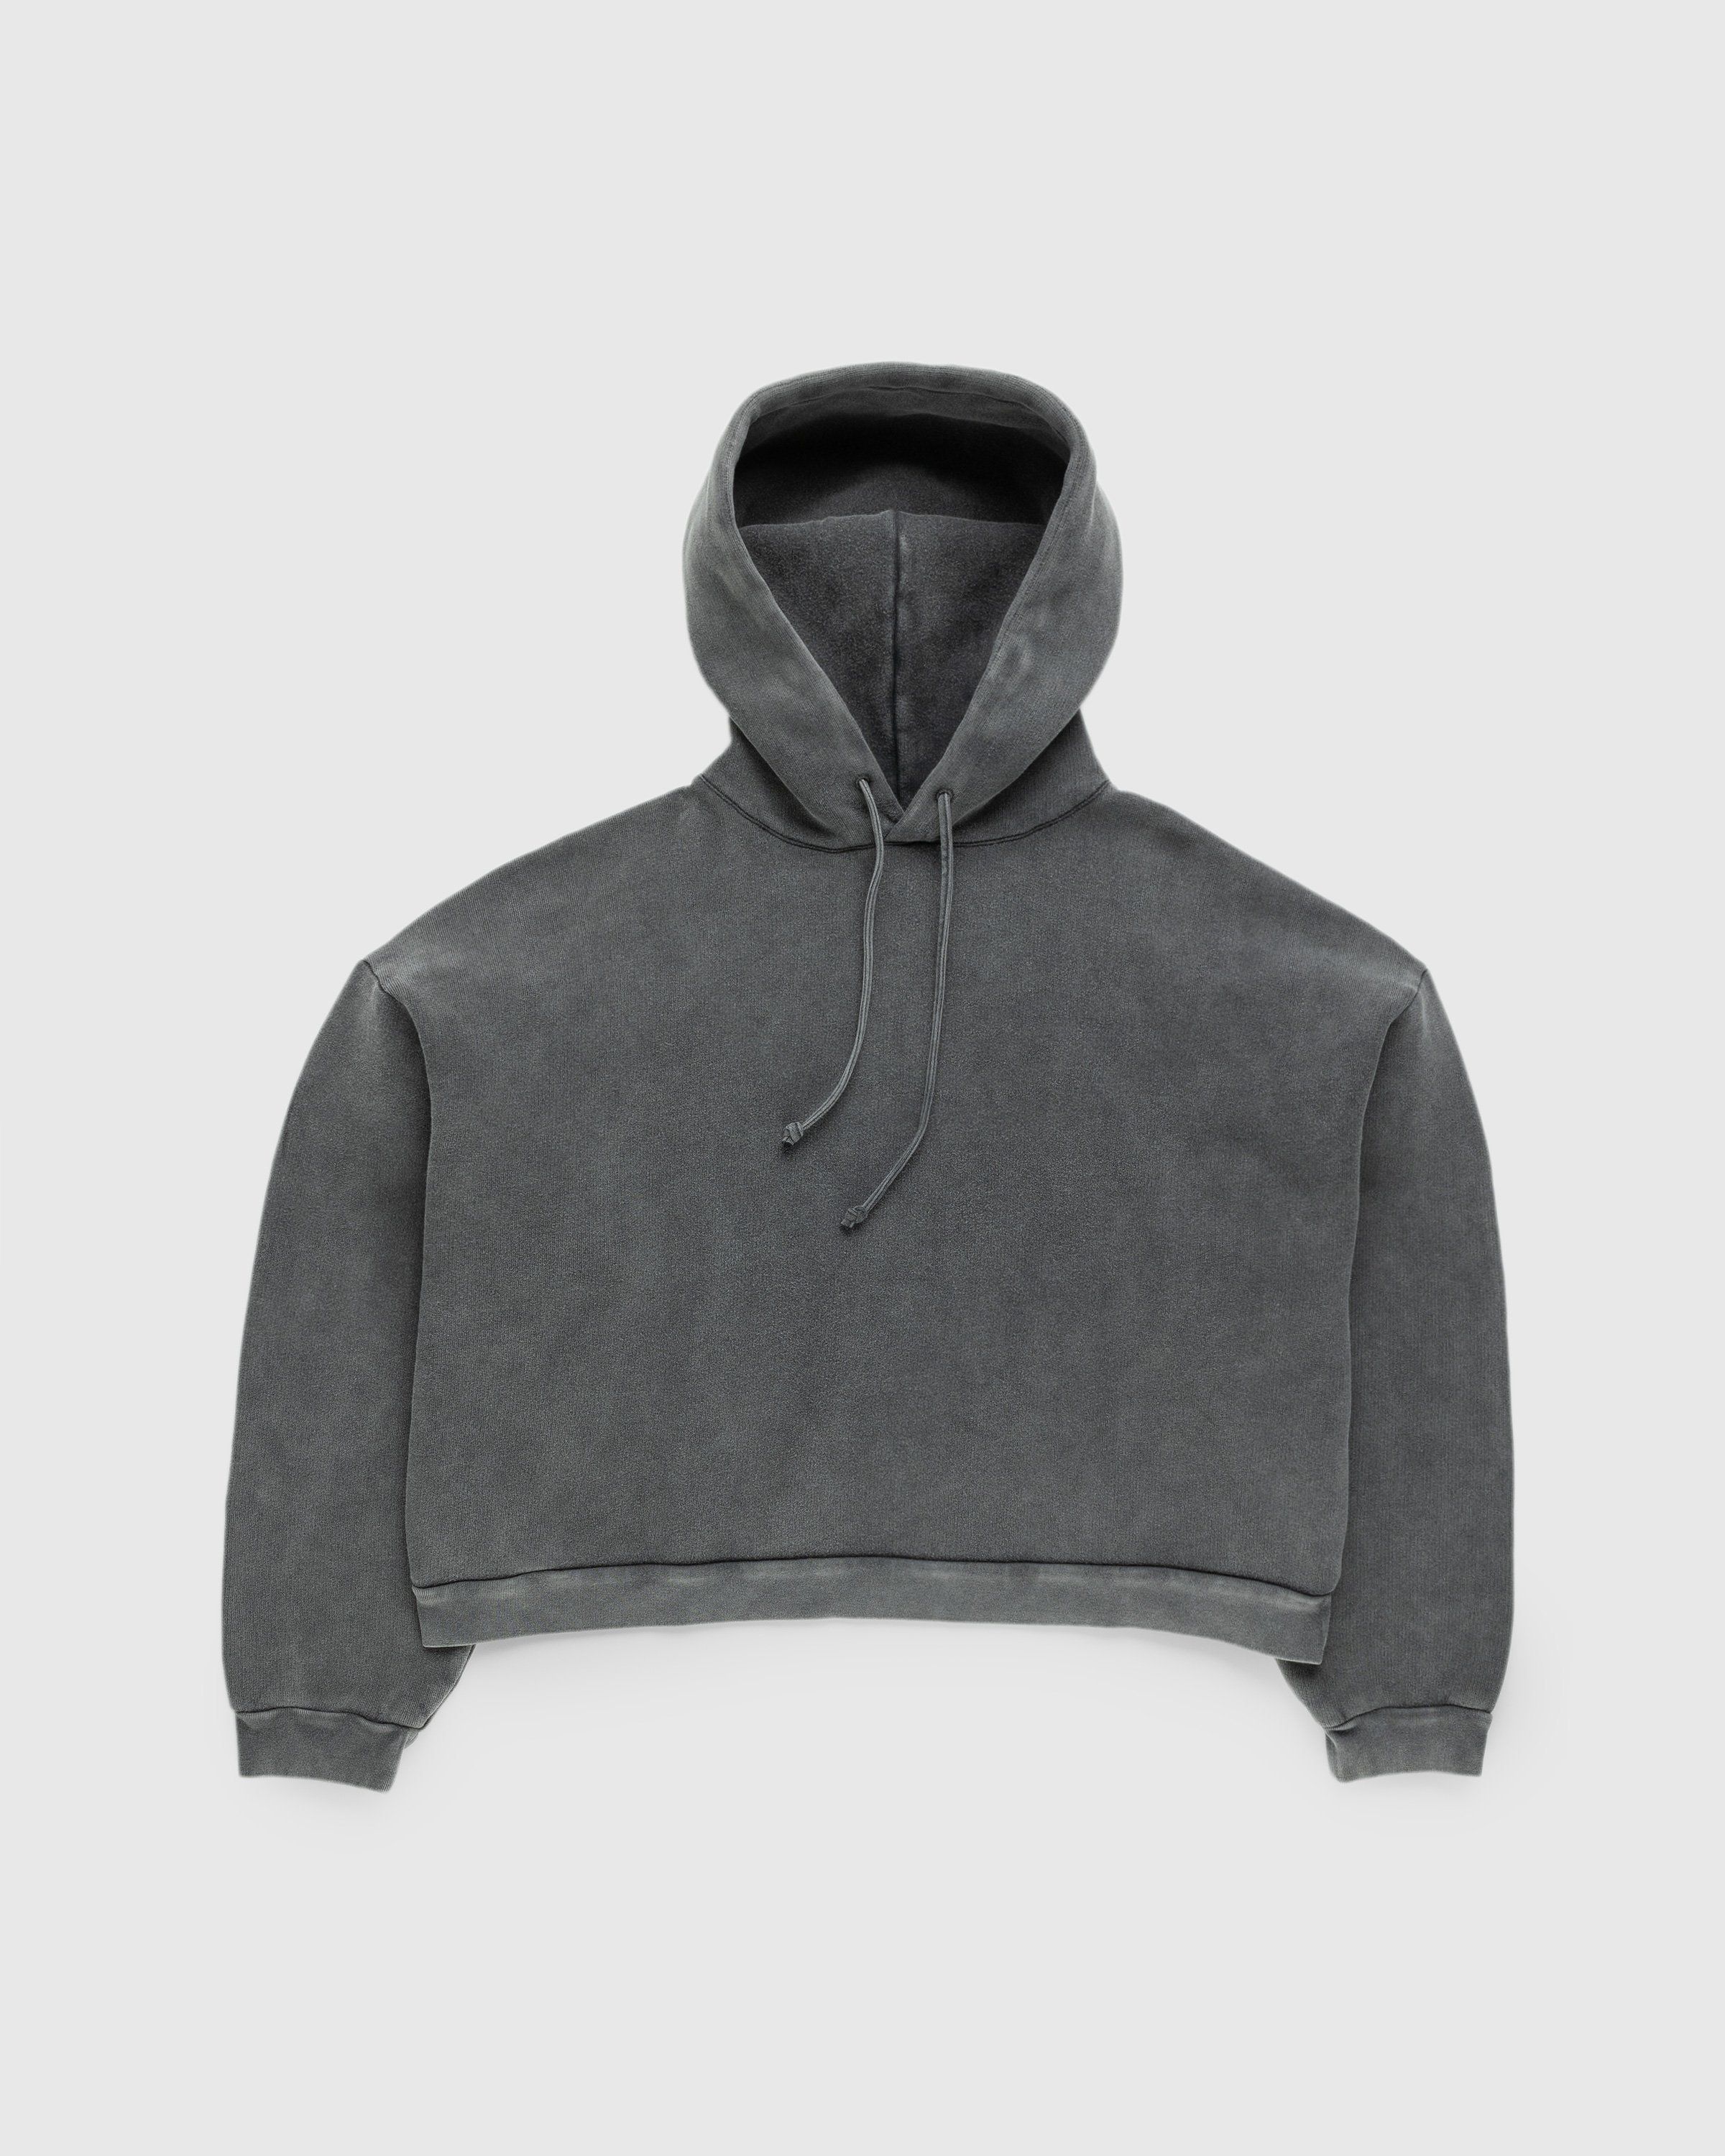 Acne Studios - Hooded Sweatshirt Faded Black - Clothing - Grey - Image 1